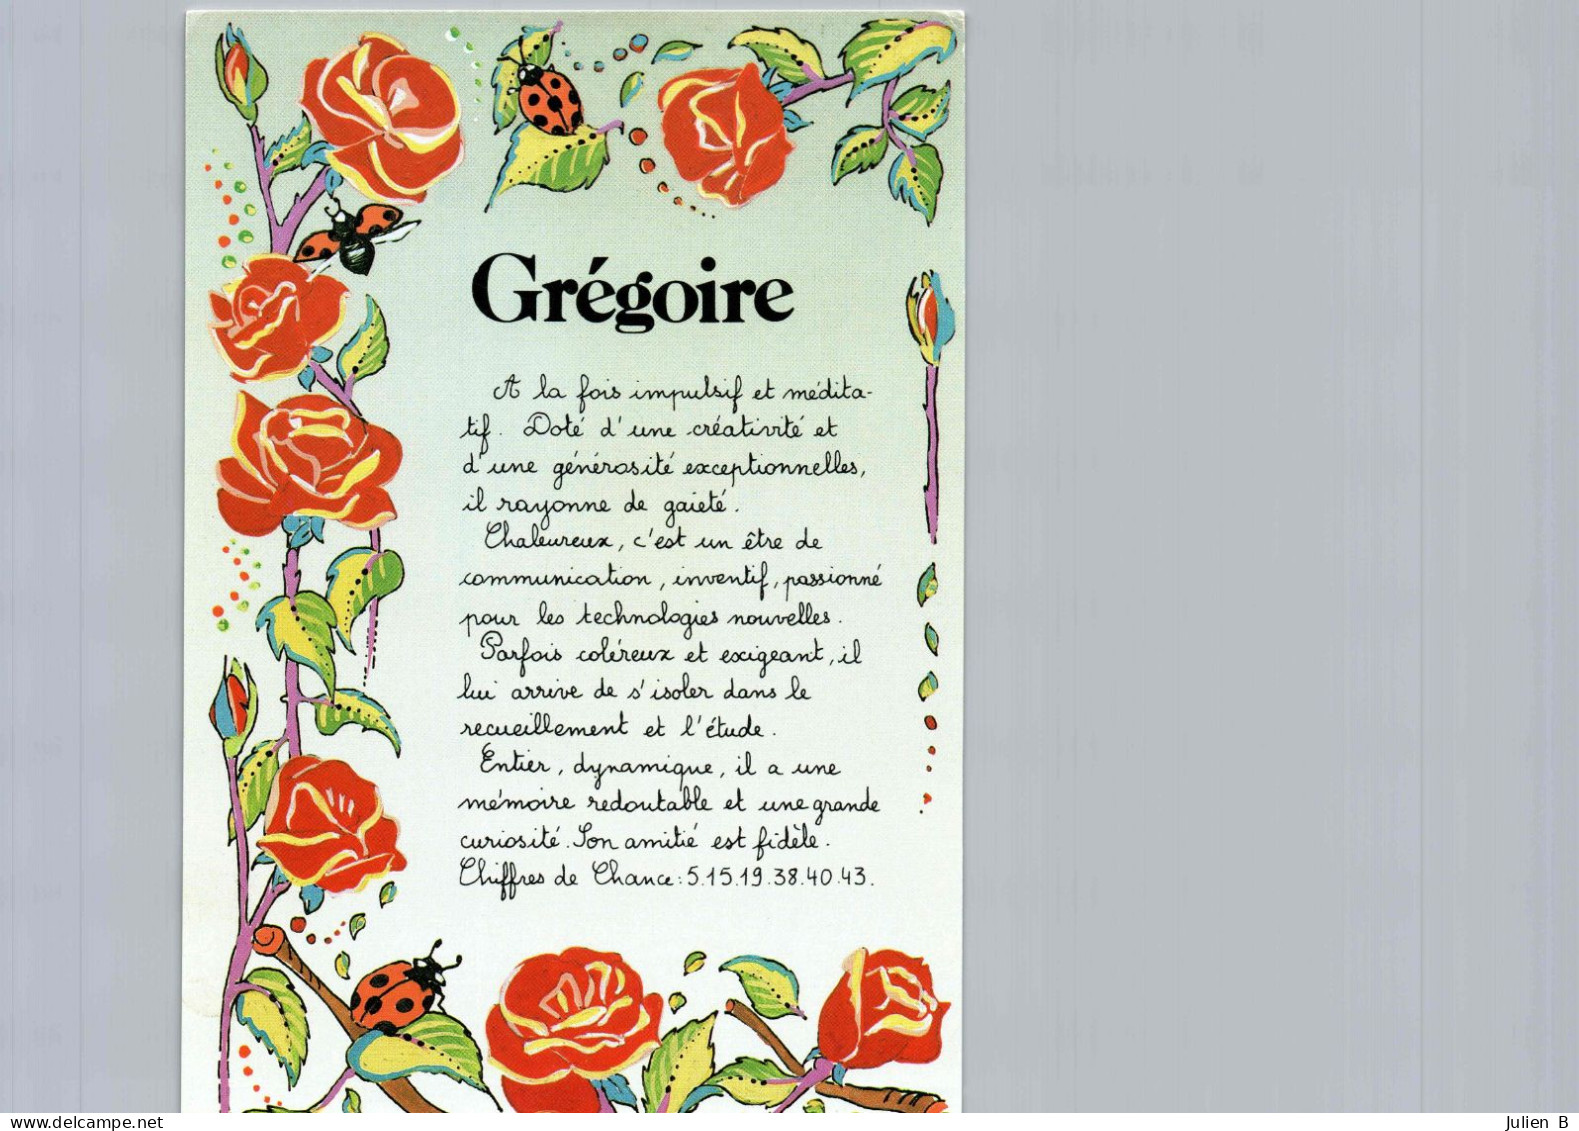 Gregoire, Edition Andre Barthelemy - Voornamen